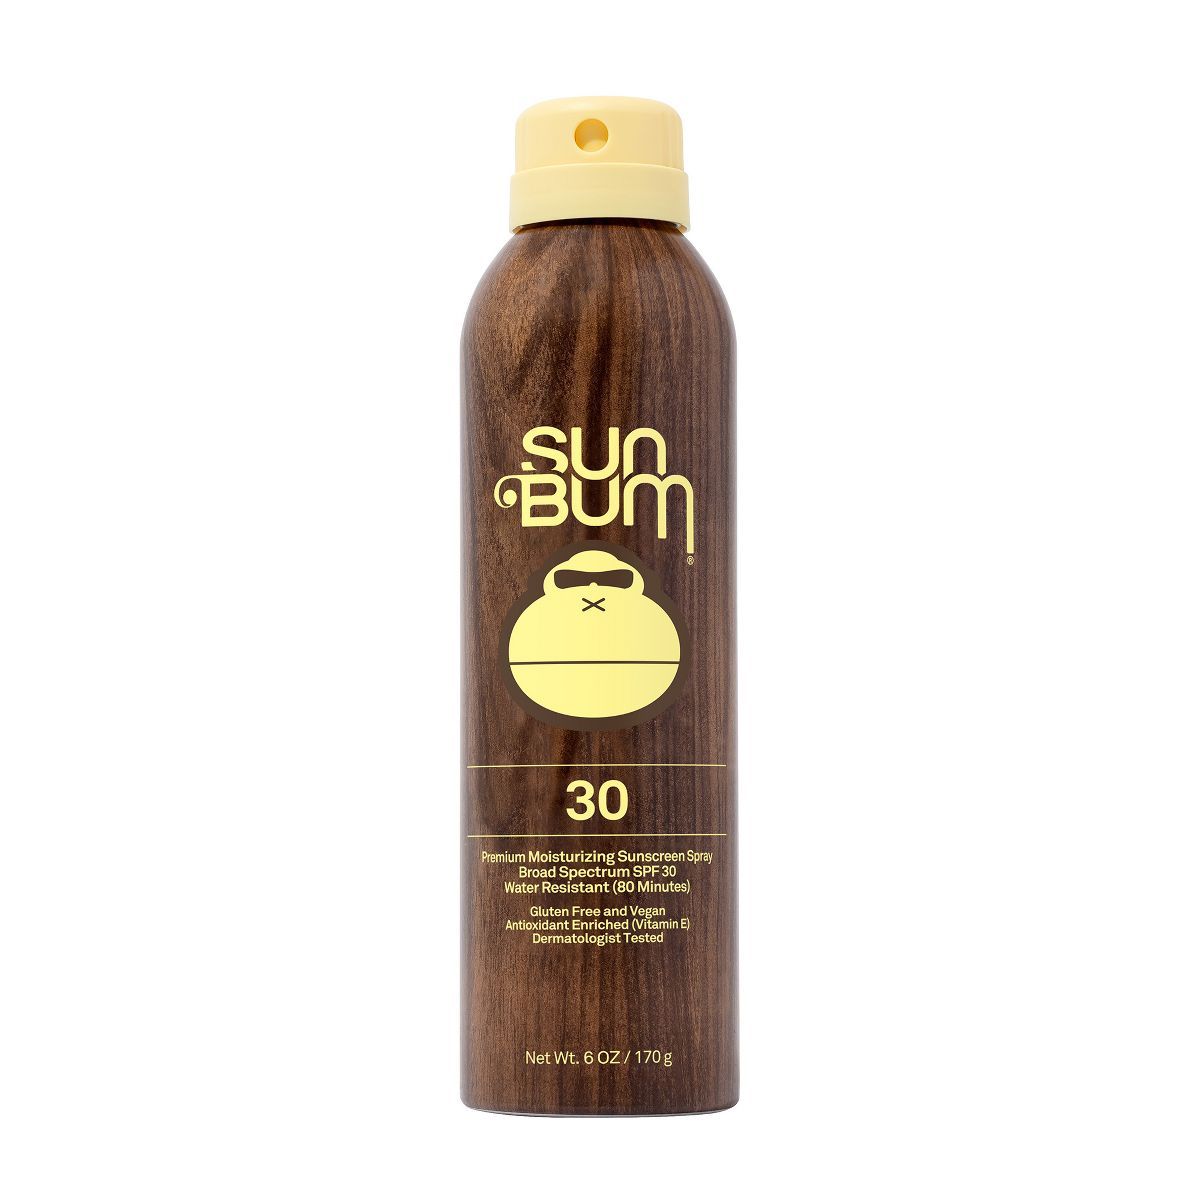 Sun Bum Original Sunscreen Spray - SPF 30 - 6oz | Target